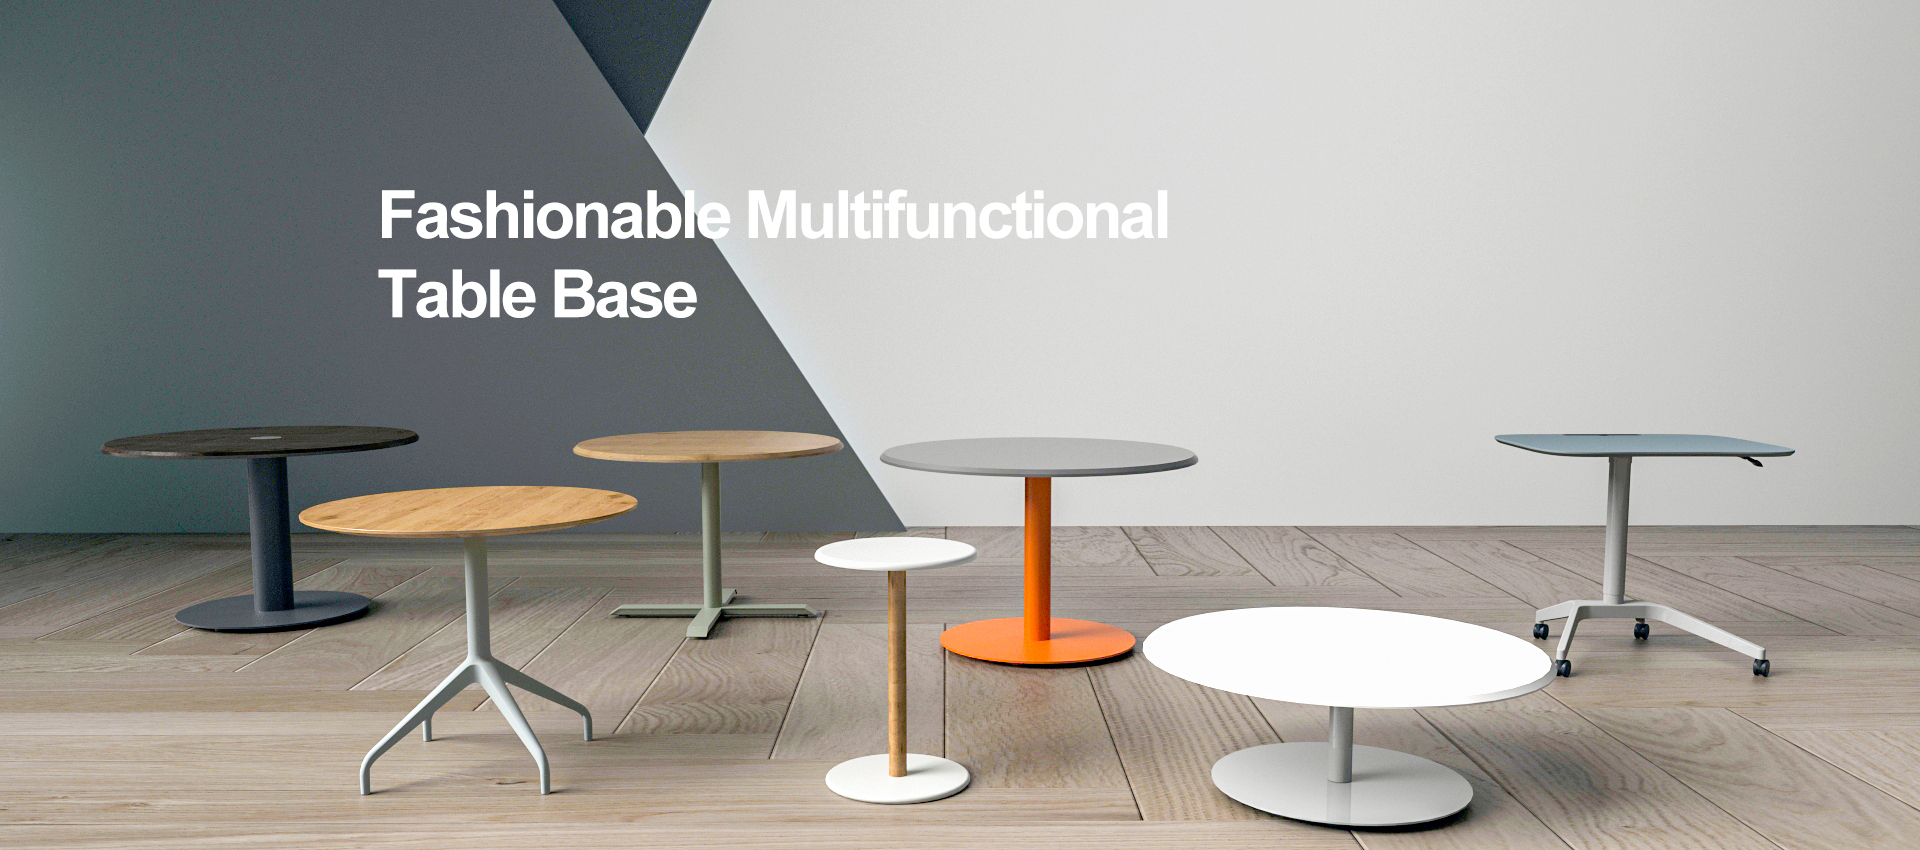 Fashionable Multifunctional Table Base